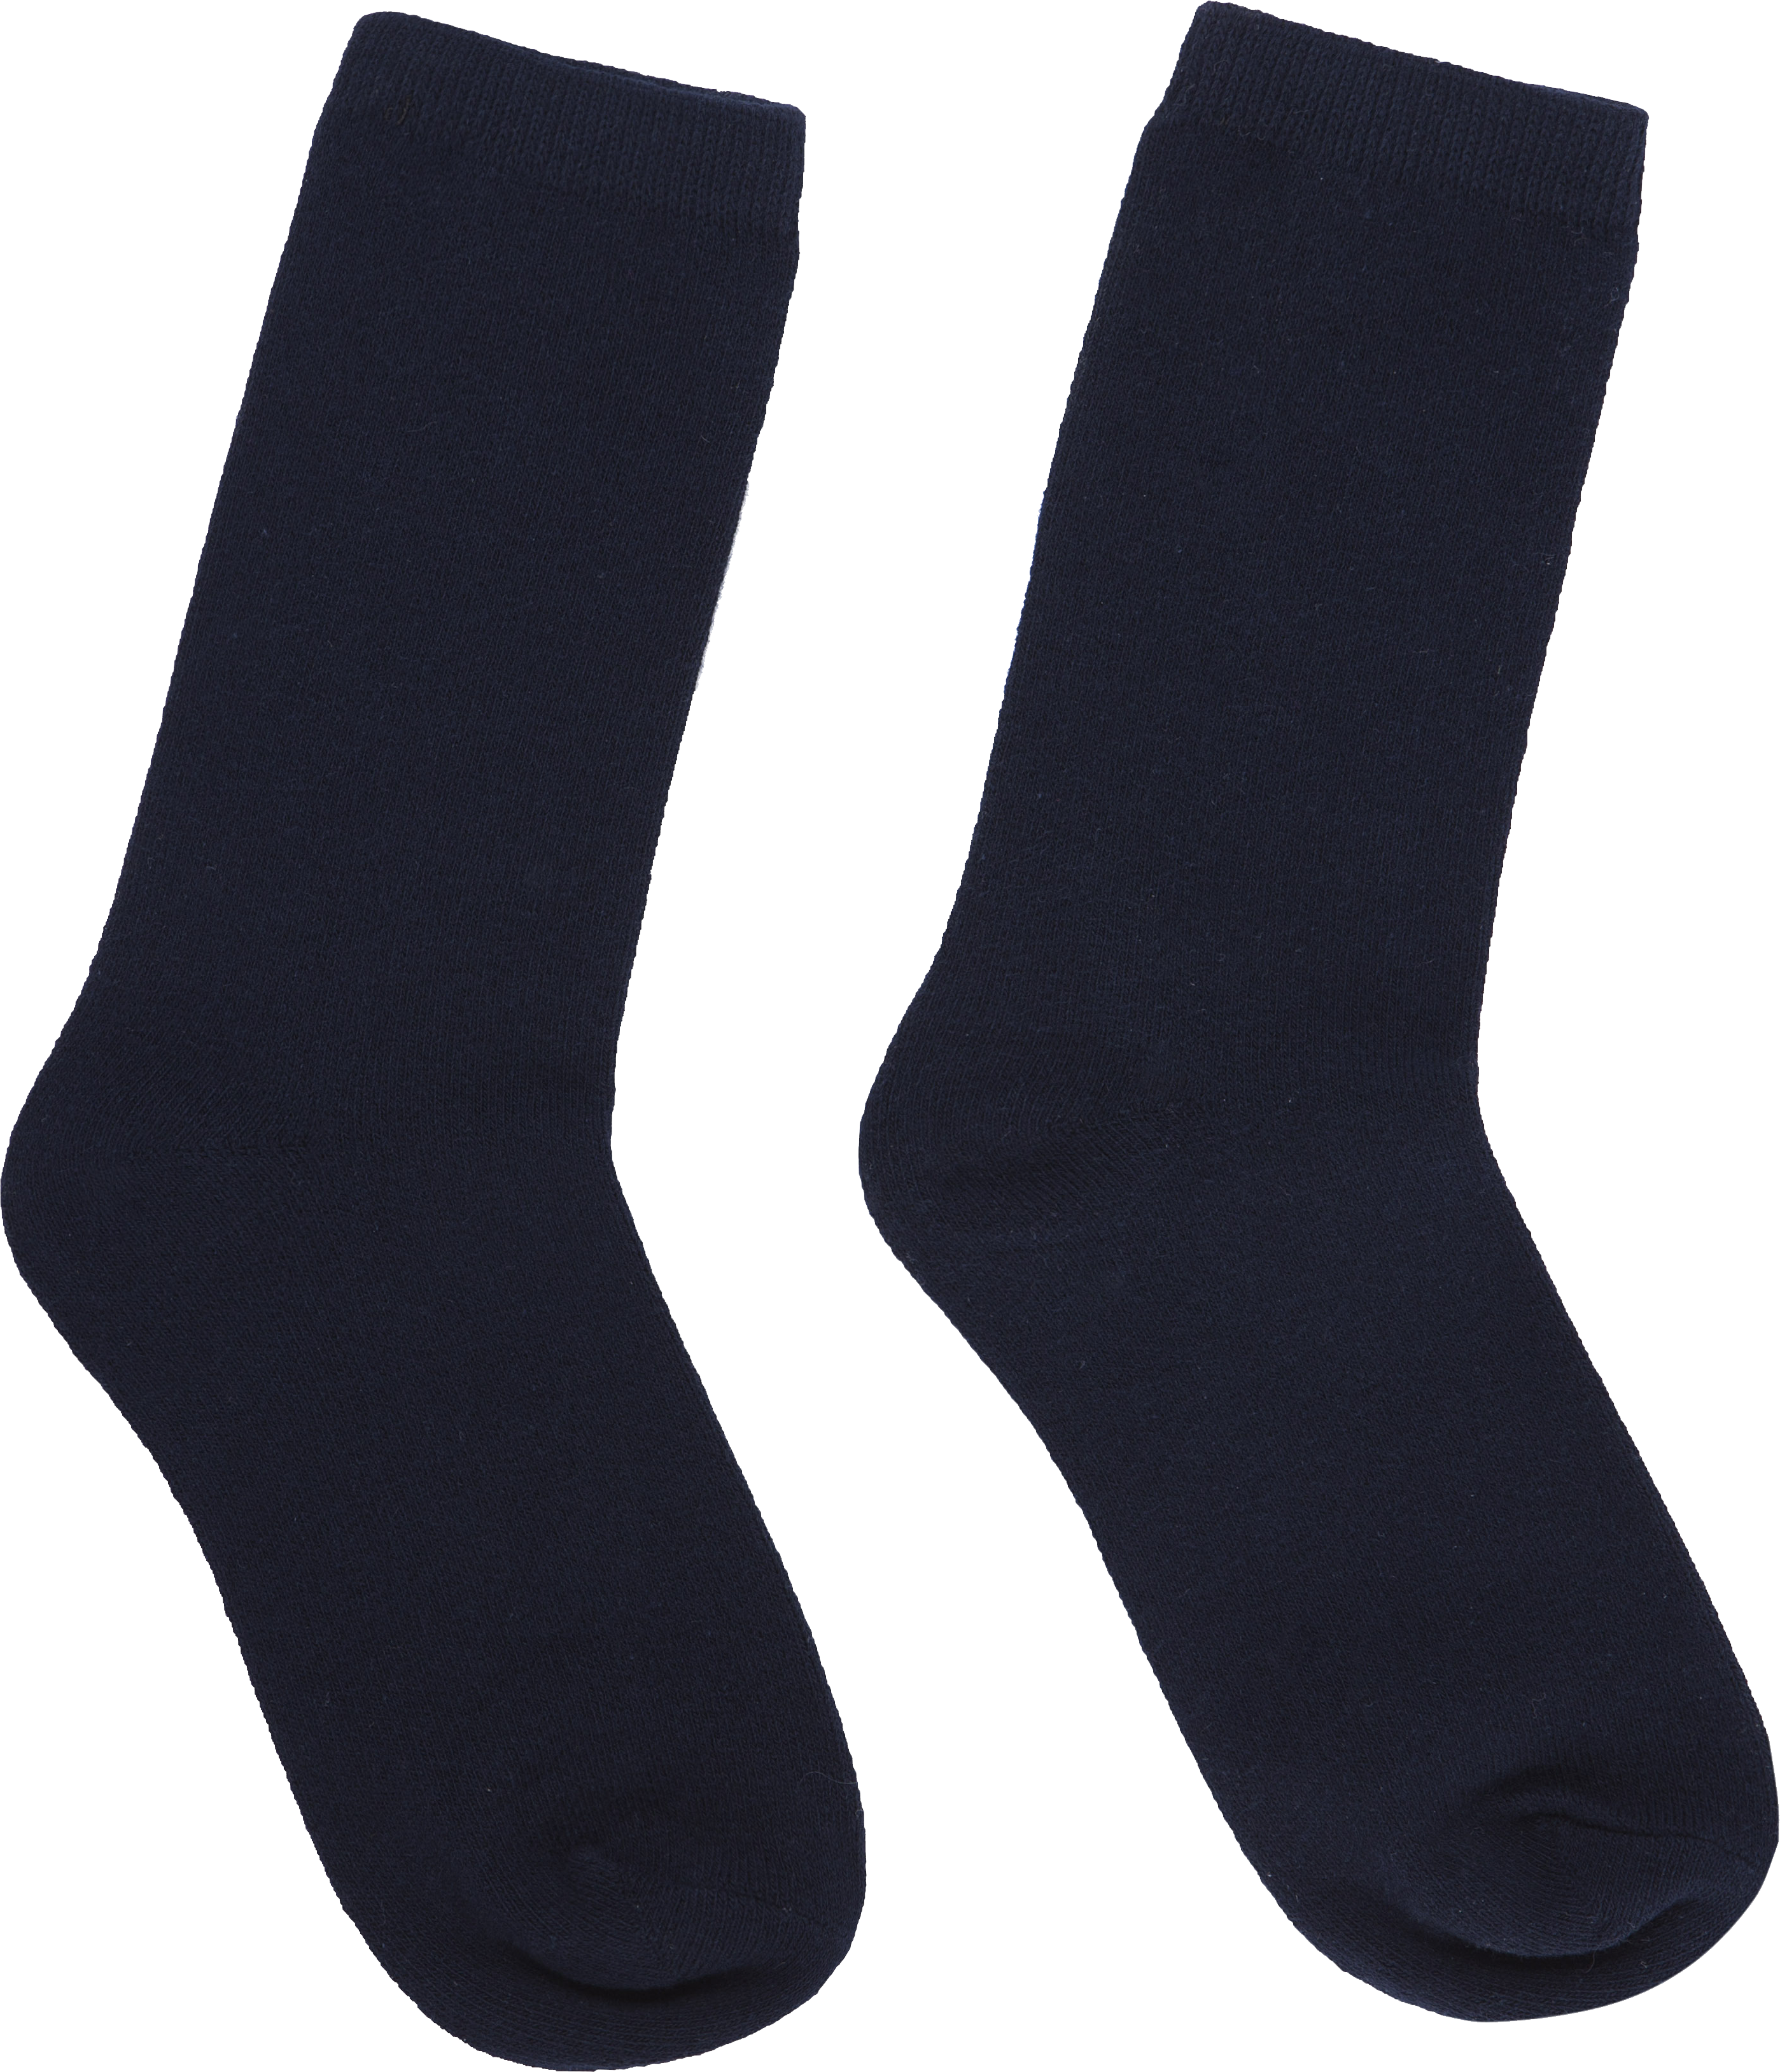 Siyah Çoraplar